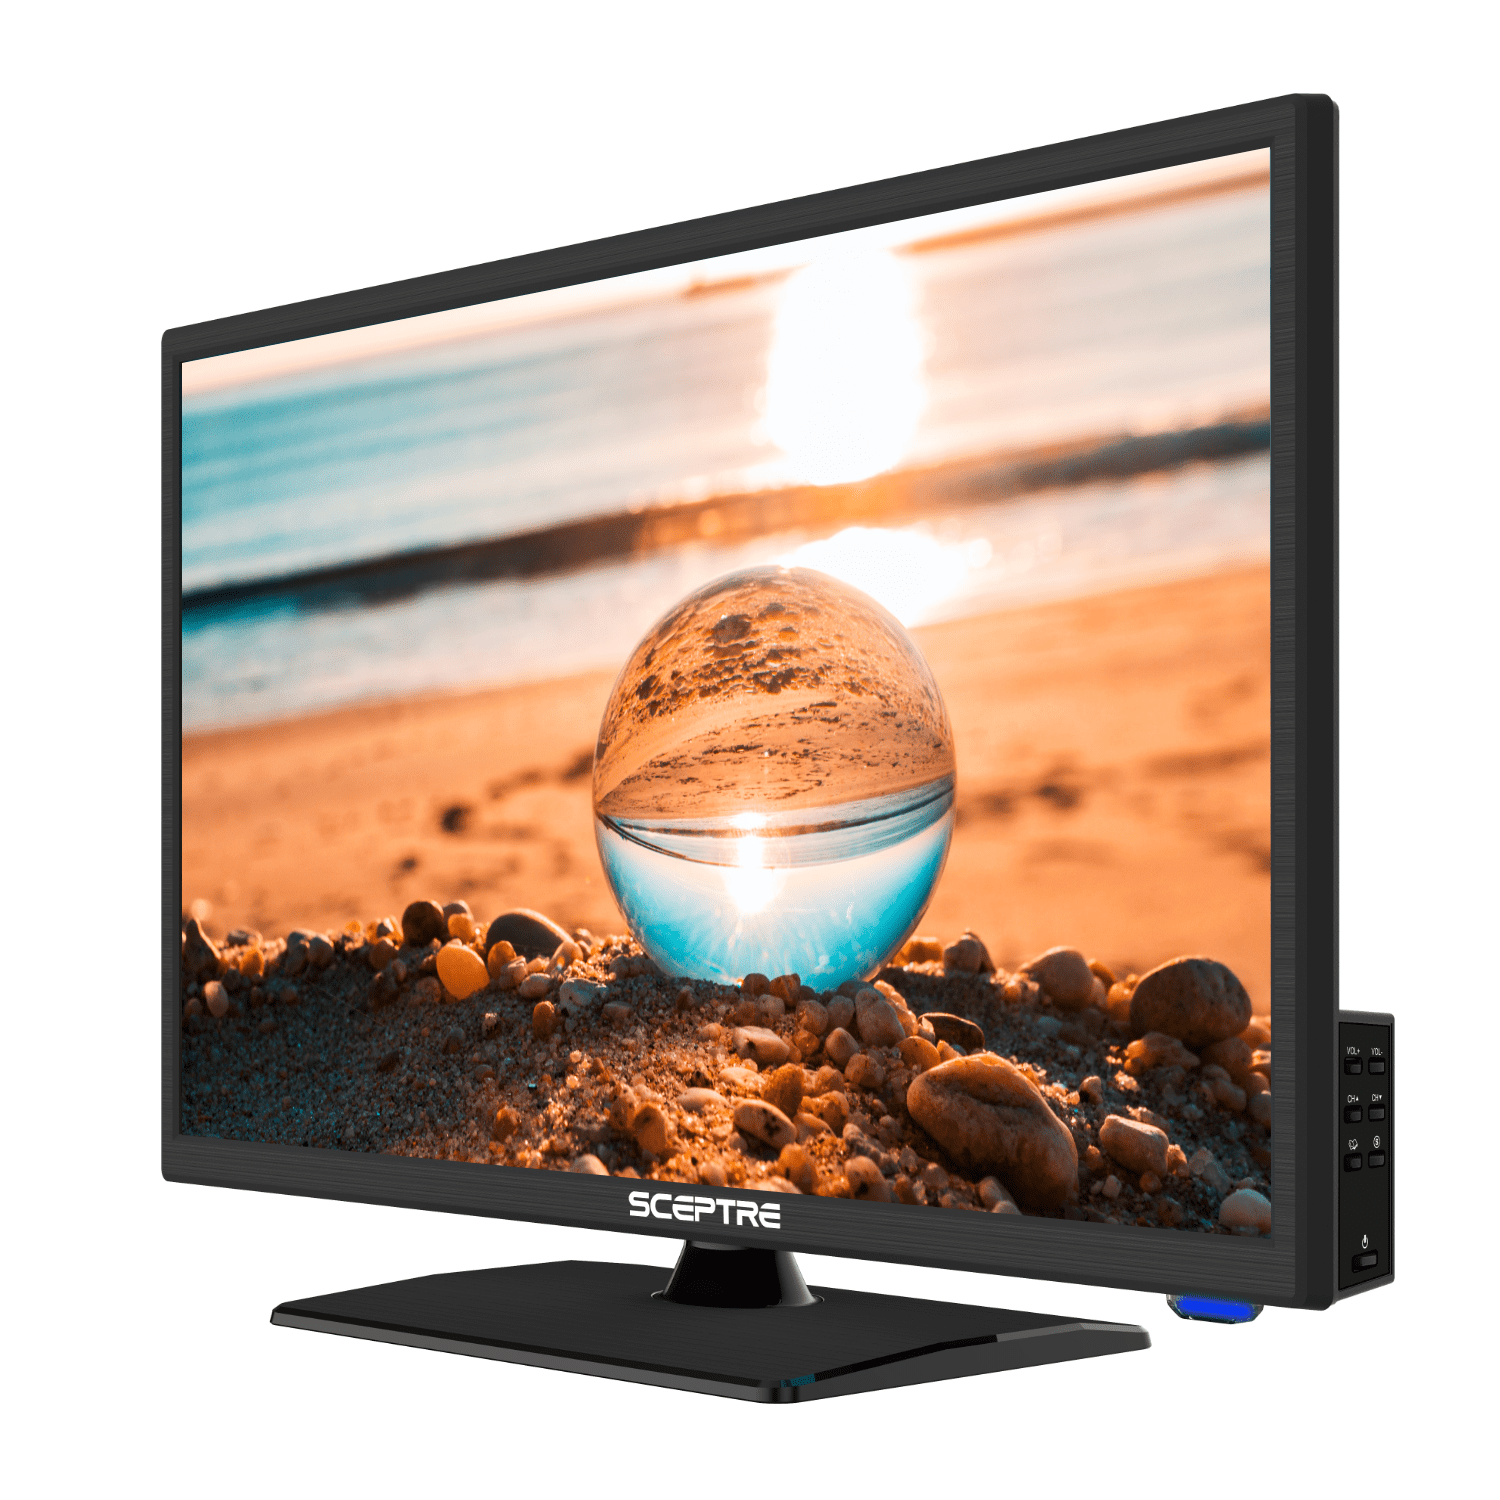 Sceptre 1080P FHD LED TV - Walmart.com